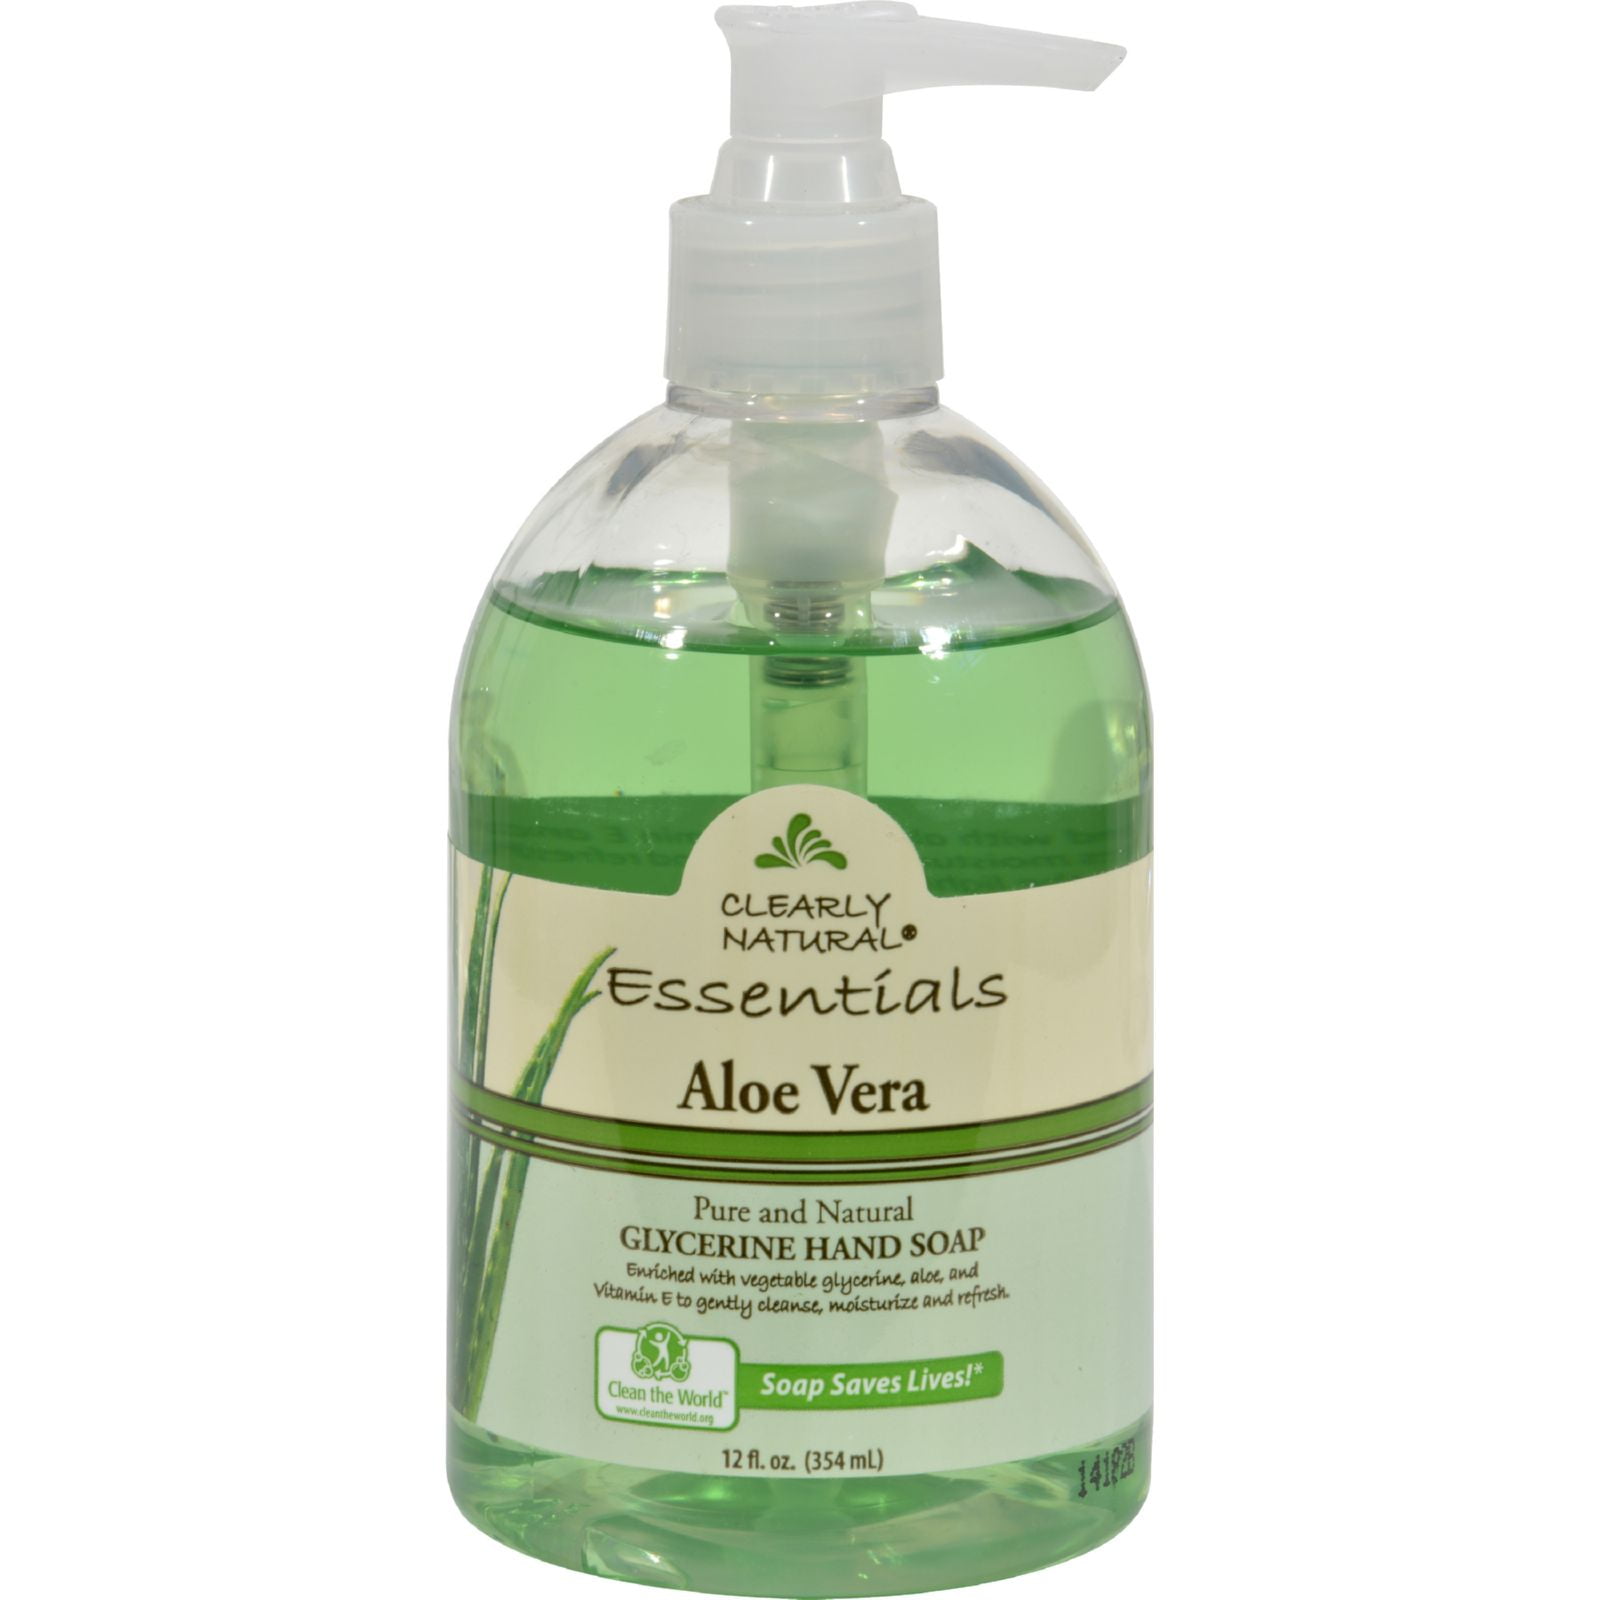 Clearly Natural Essentials Aloe Vera Glycerin Soap, 4 oz